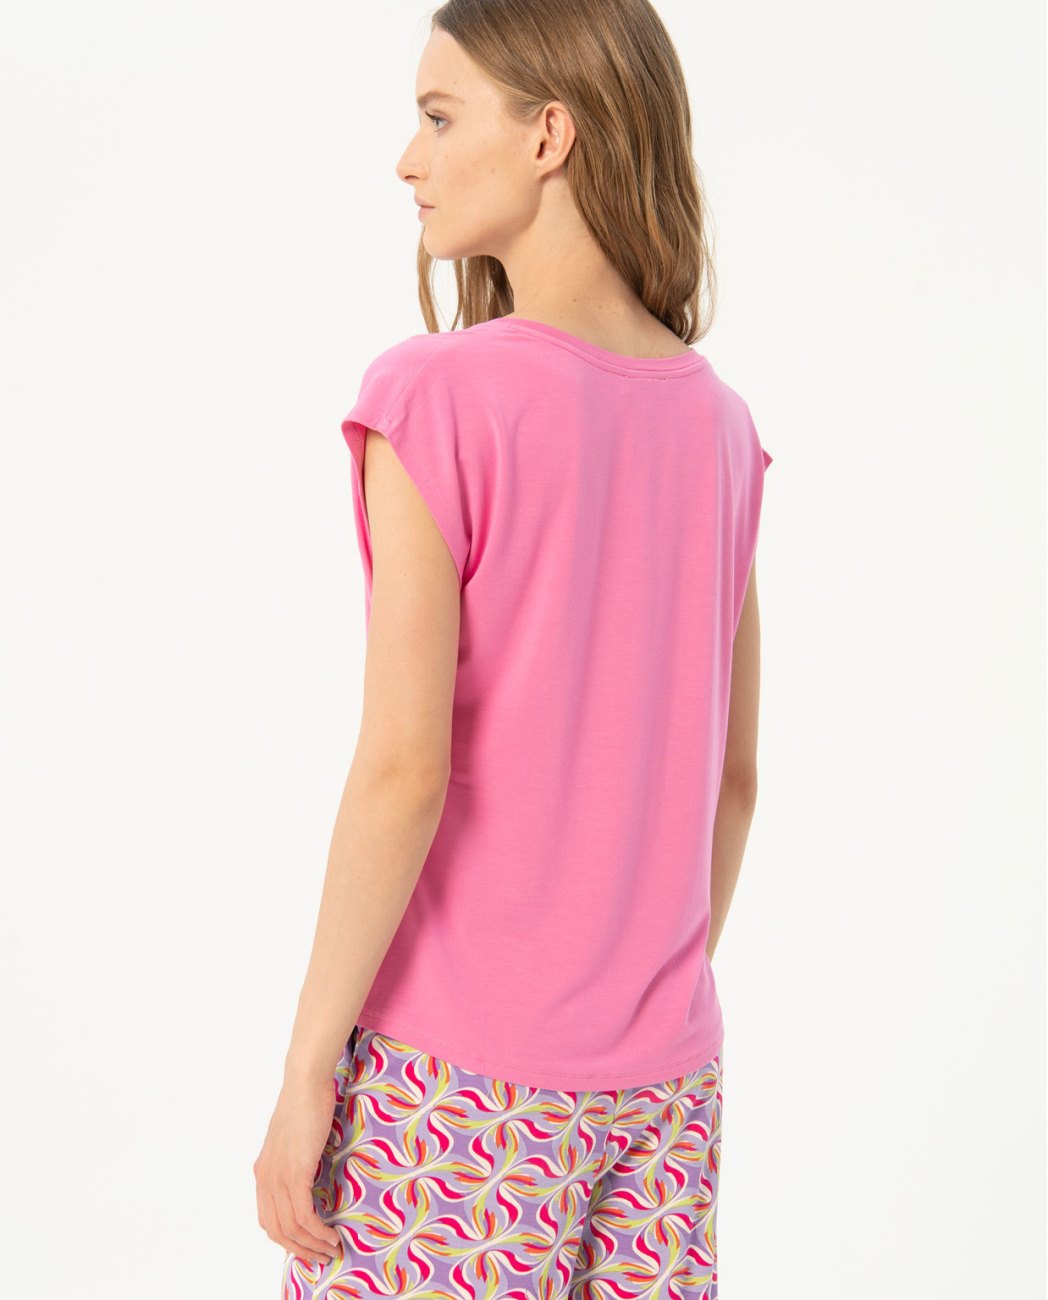 ESBU014 v-neck t-shirt pink - Surkana